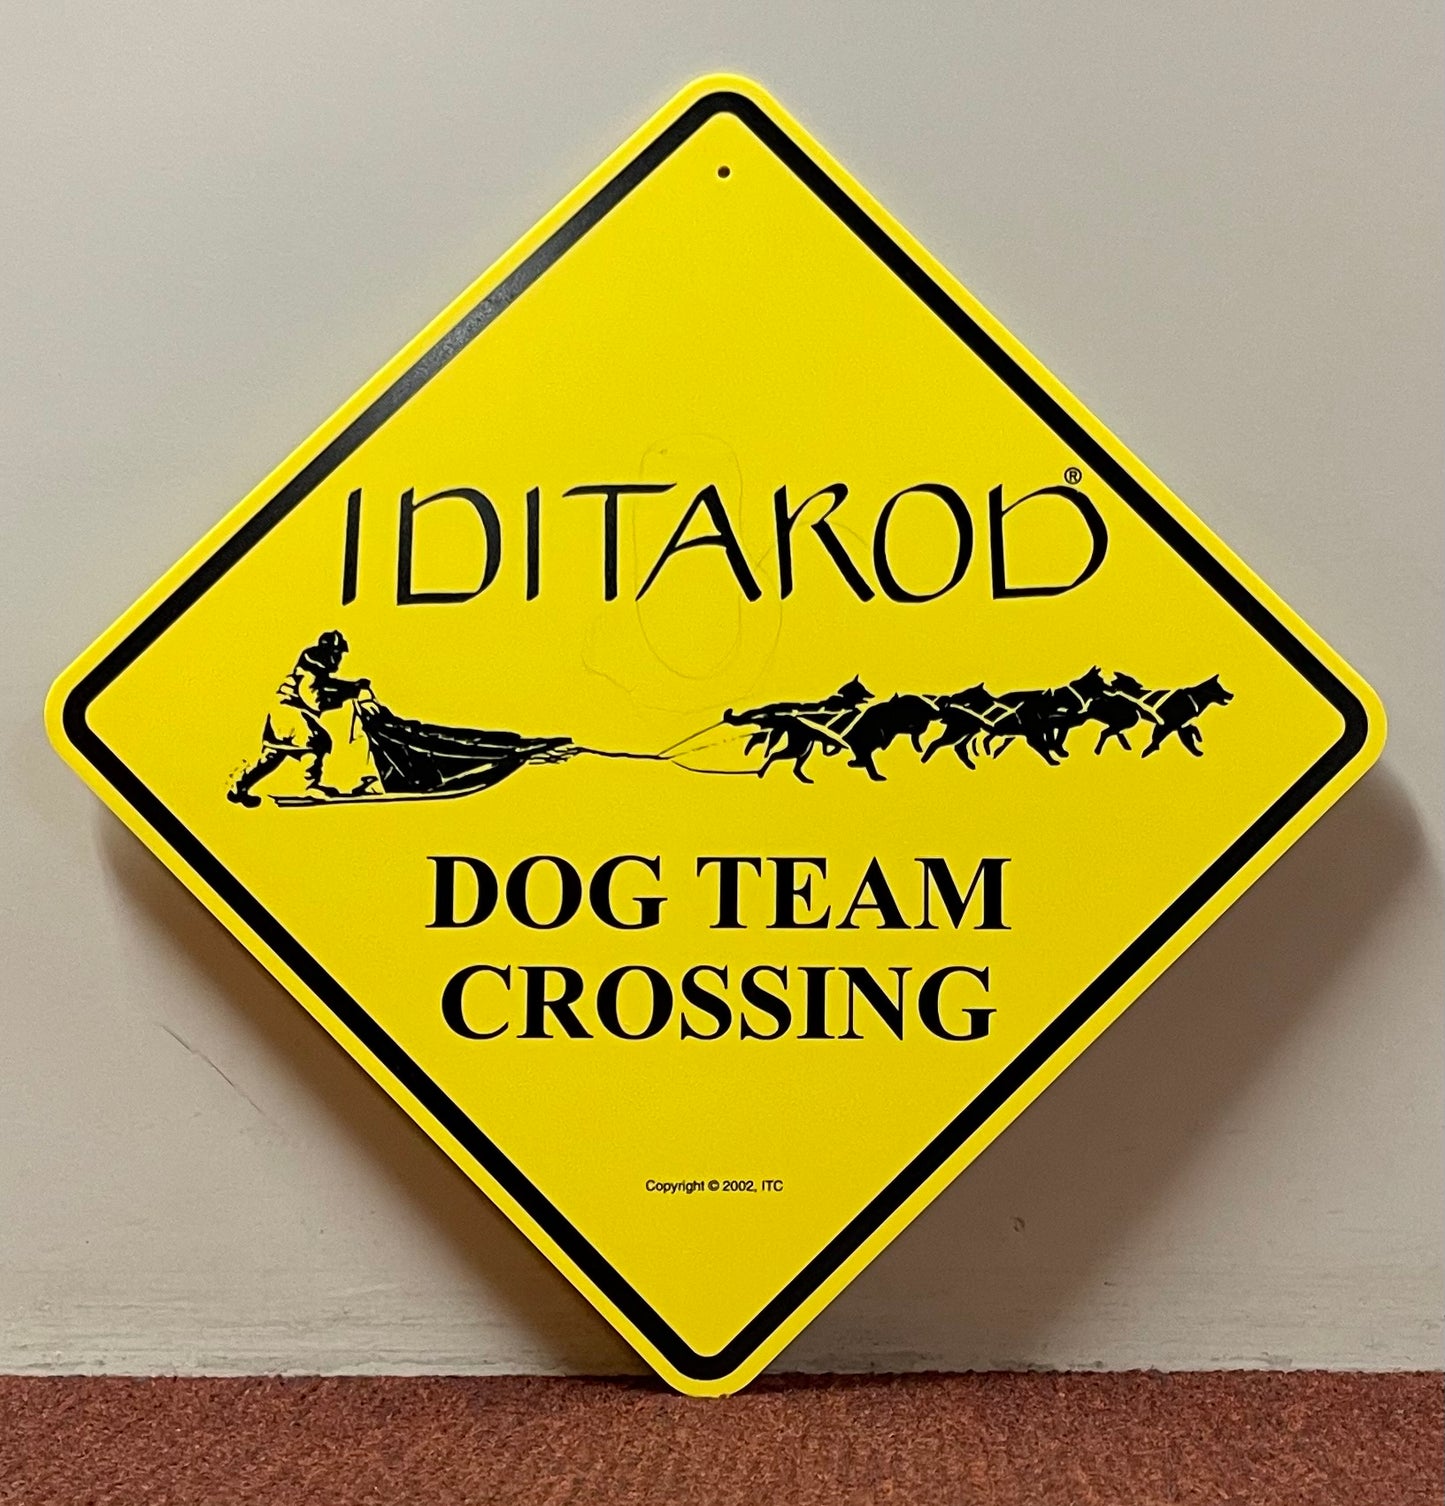 Dog Crossing Sign